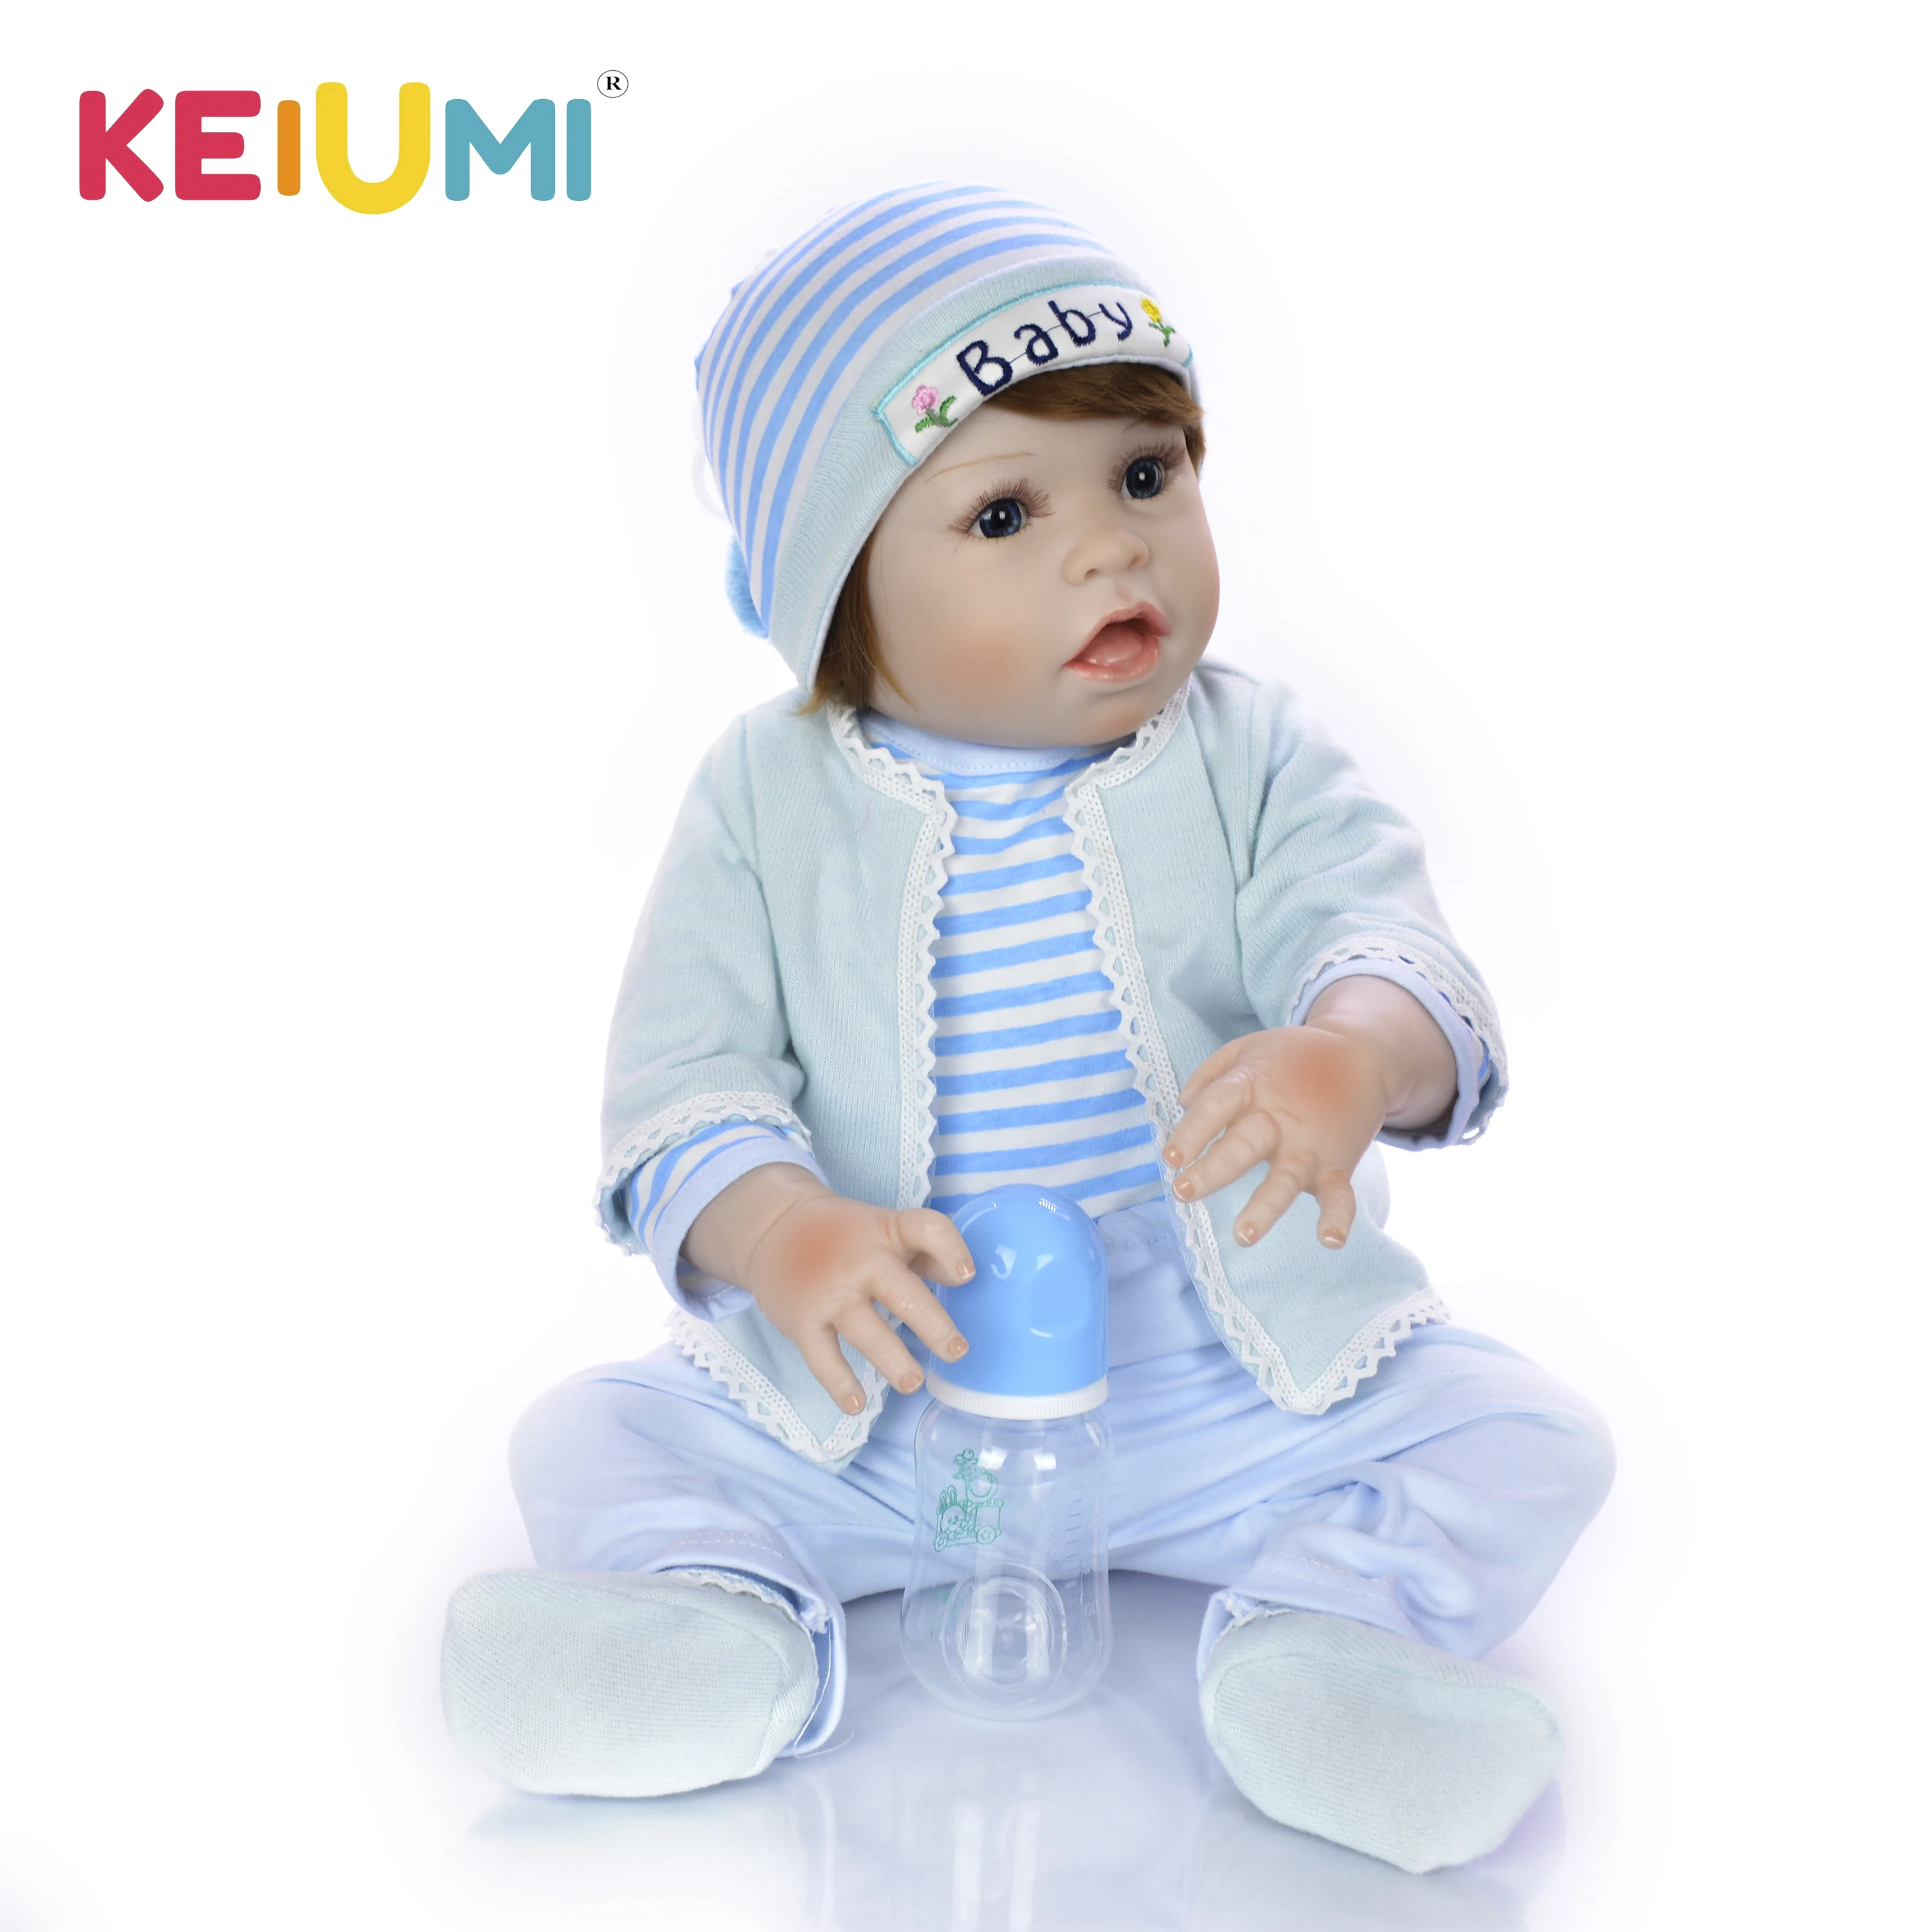 

KEIUMI Handsome 23 Inch Reborn Baby Dolls Full Body Silicone Vinyl Lifelike 57 cm Babies Reborn For Kids Playmates Gift Toys